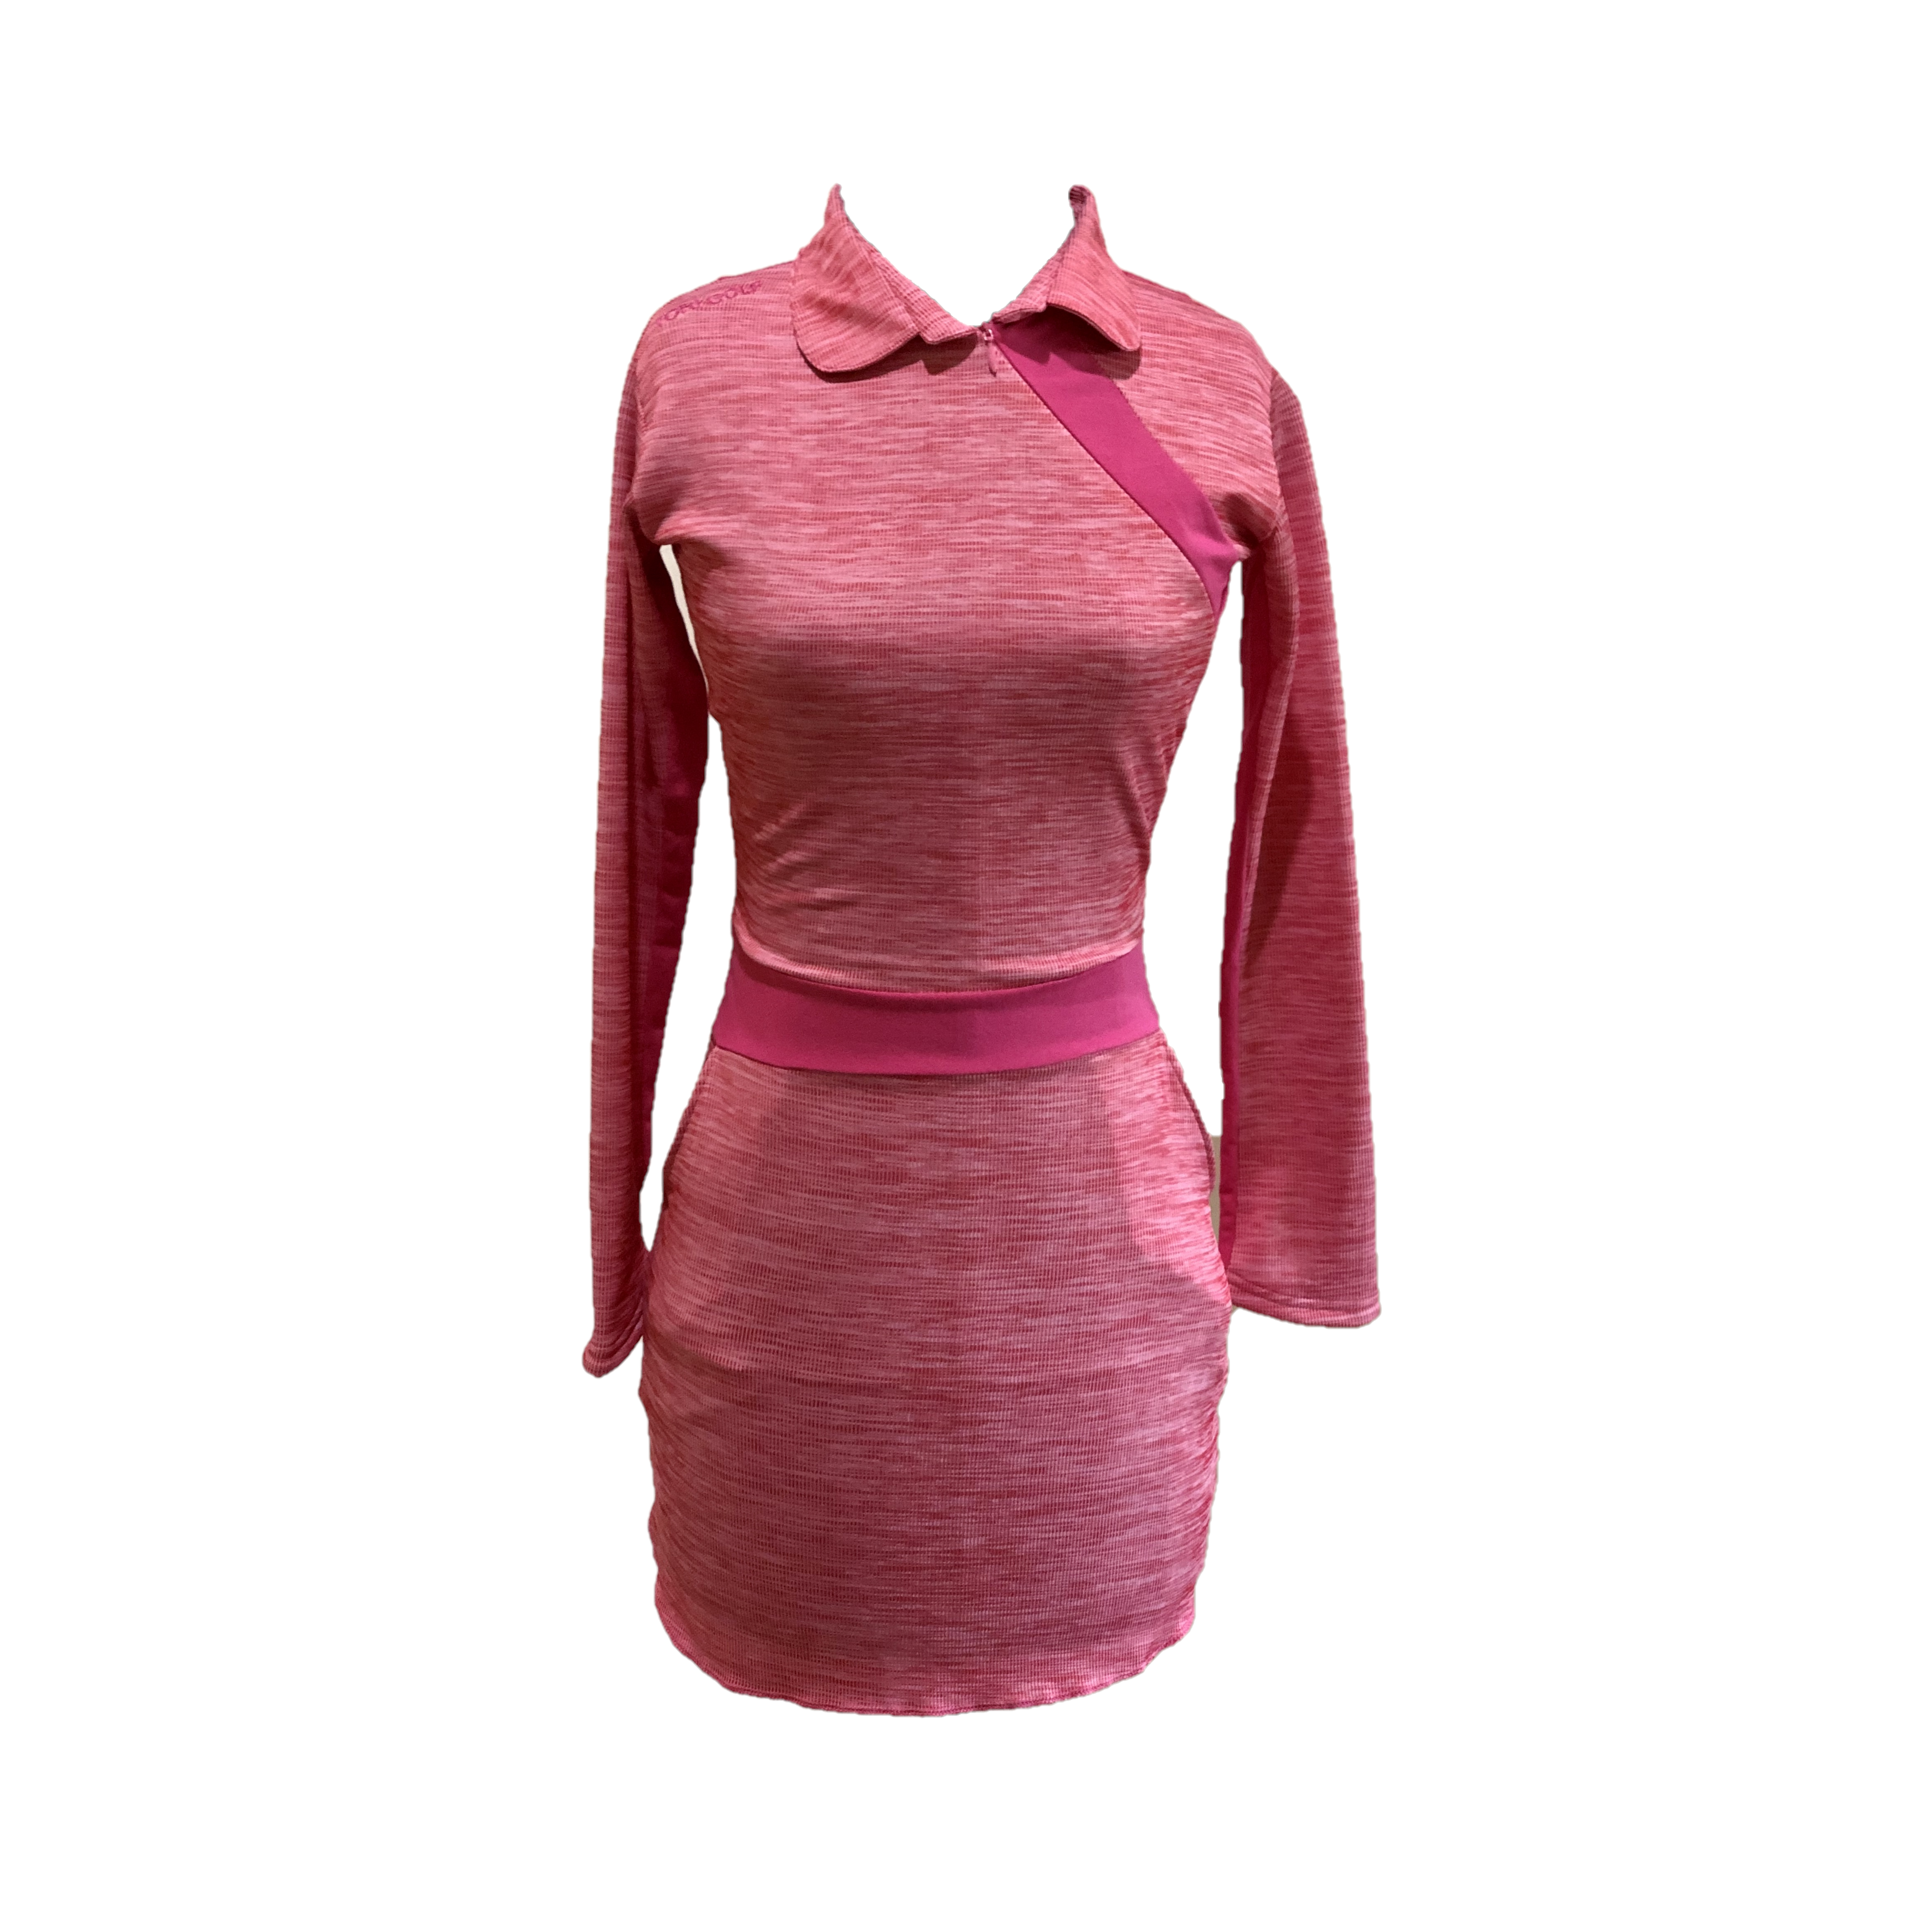 GD-010 || Golf Dress Pink with Dark Pink Texture And Trim